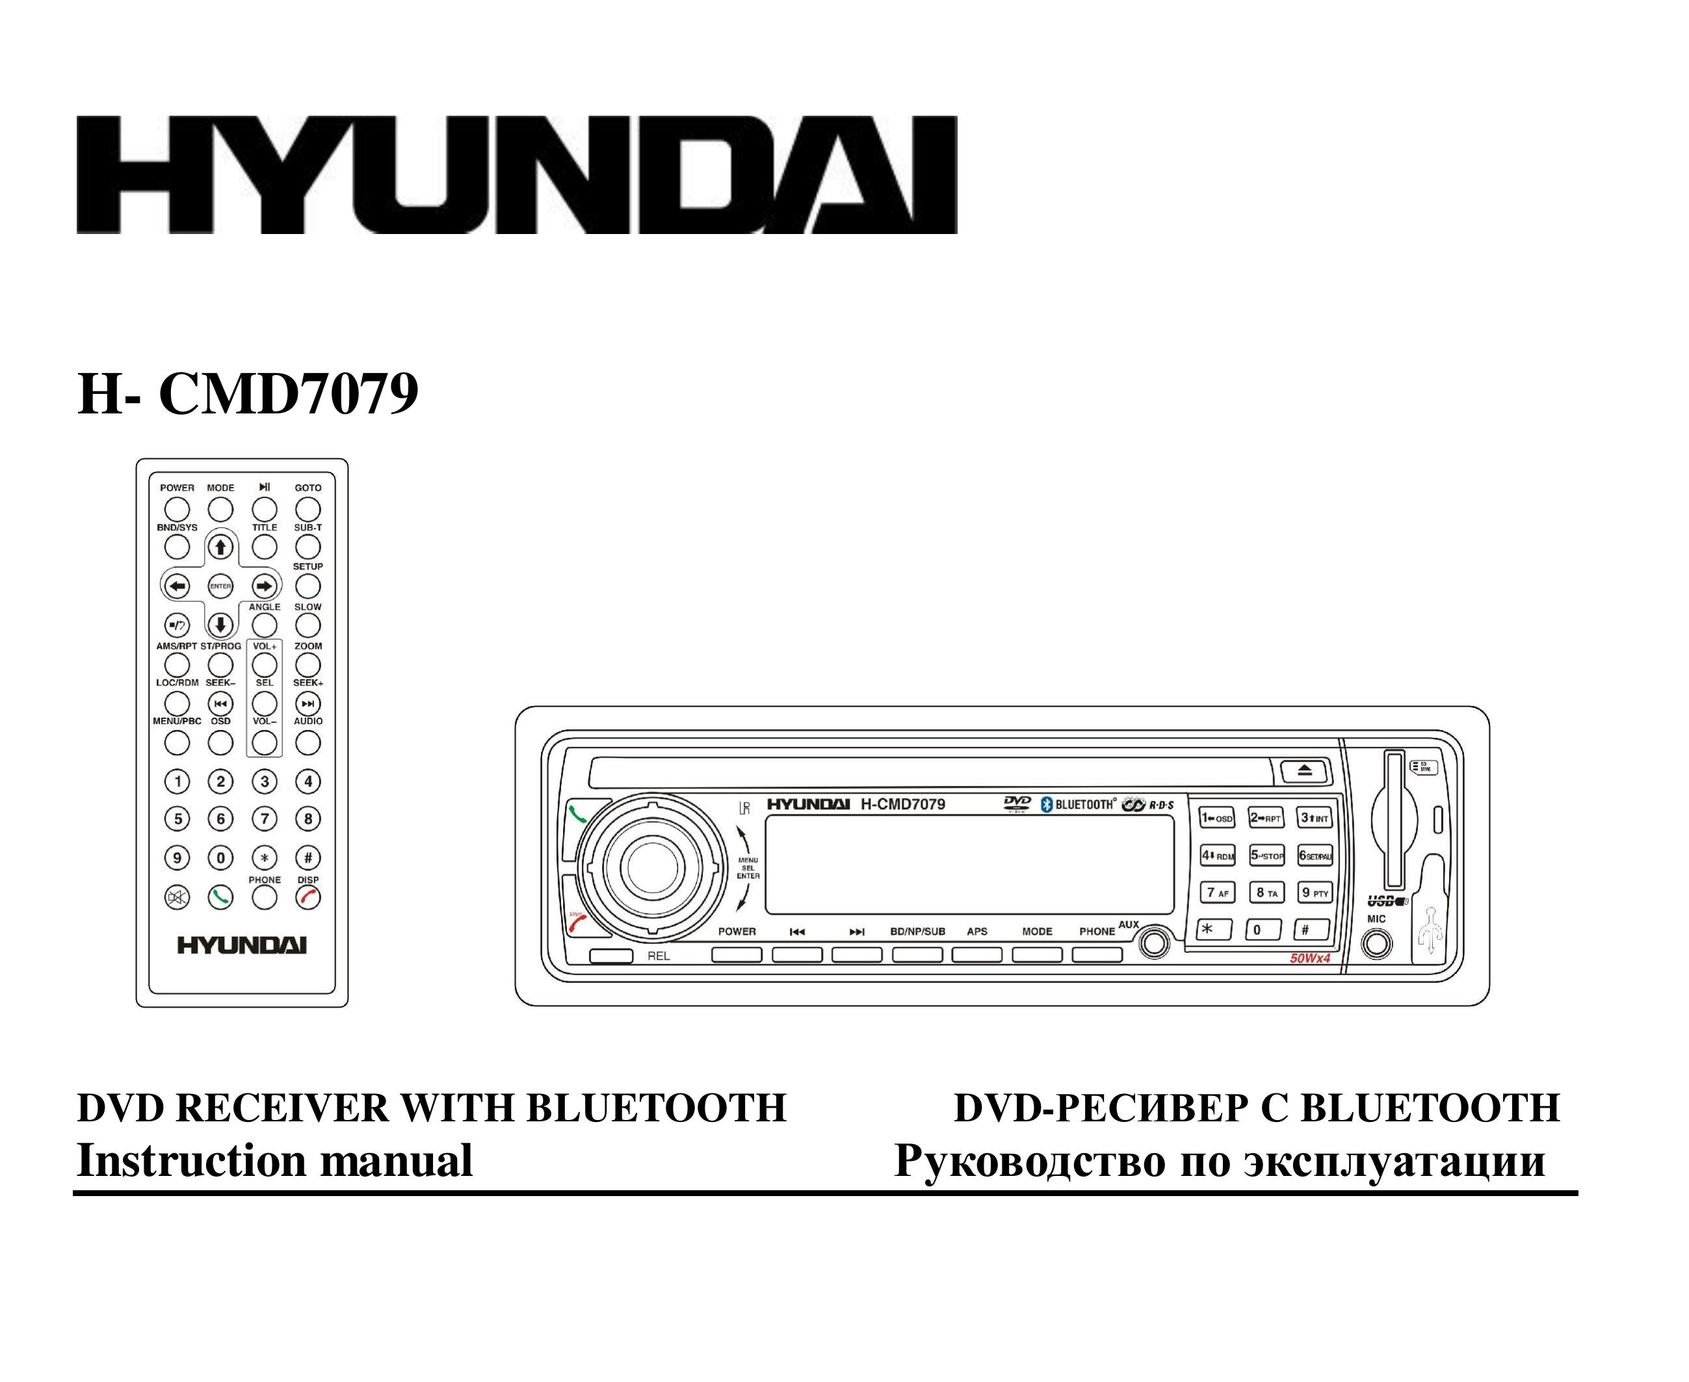 Hyundai H-CMD7079 Car Video System User Manual